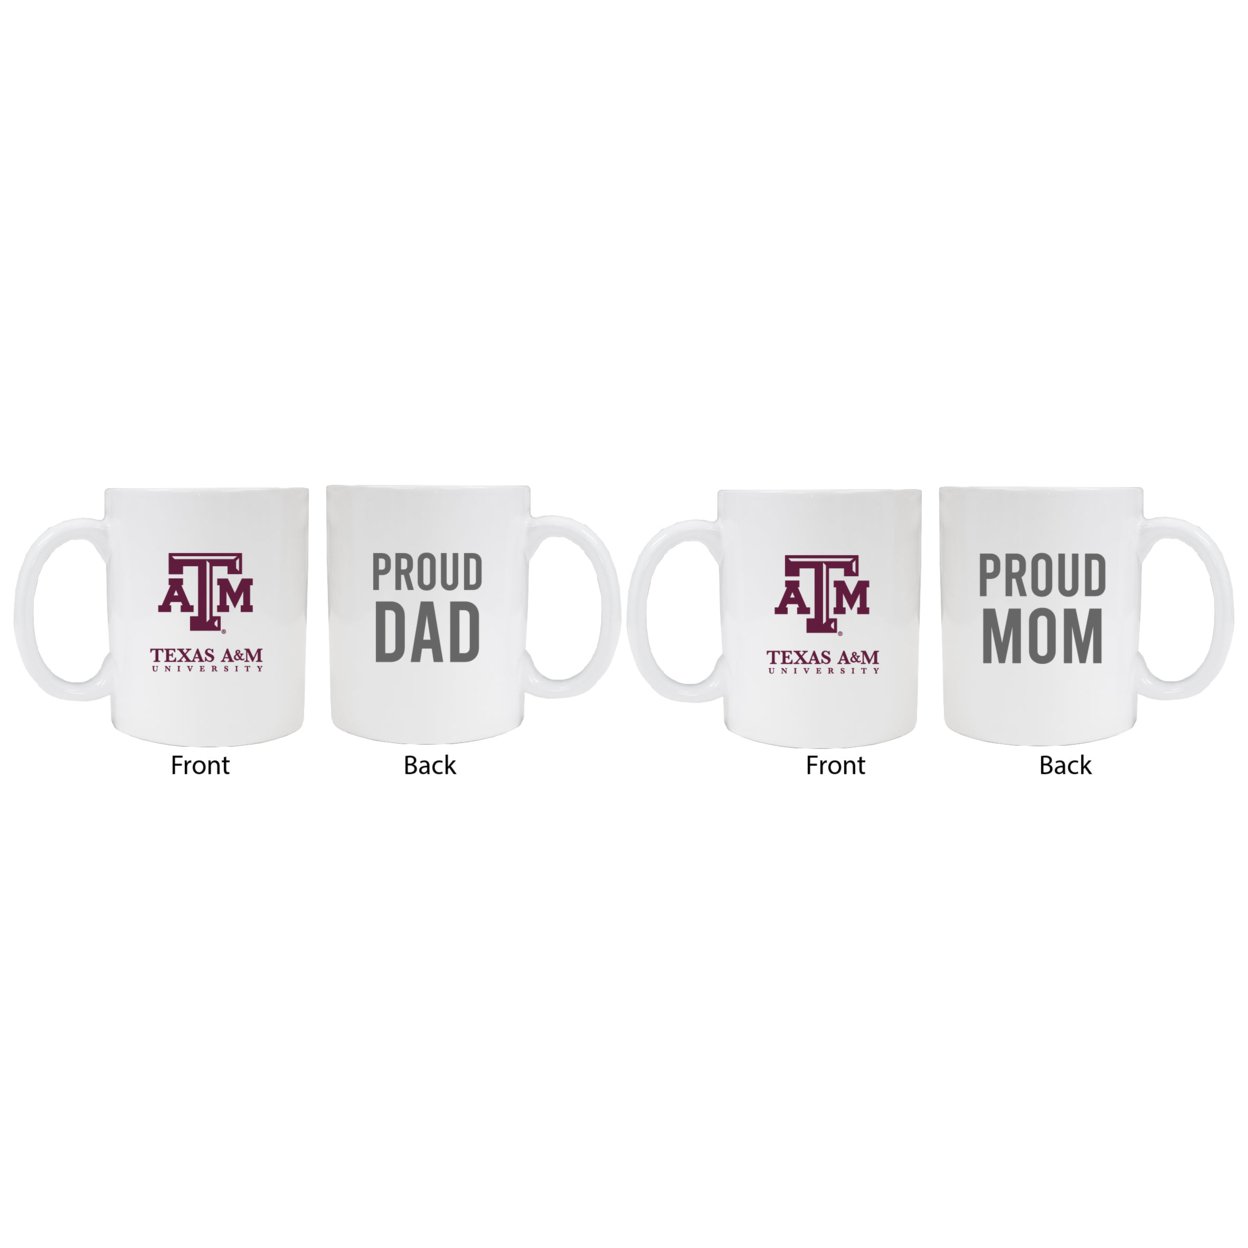 Texas A&M Aggies Proud Mom And Dad White Ceramic Coffee Mug 2 Pack (White).